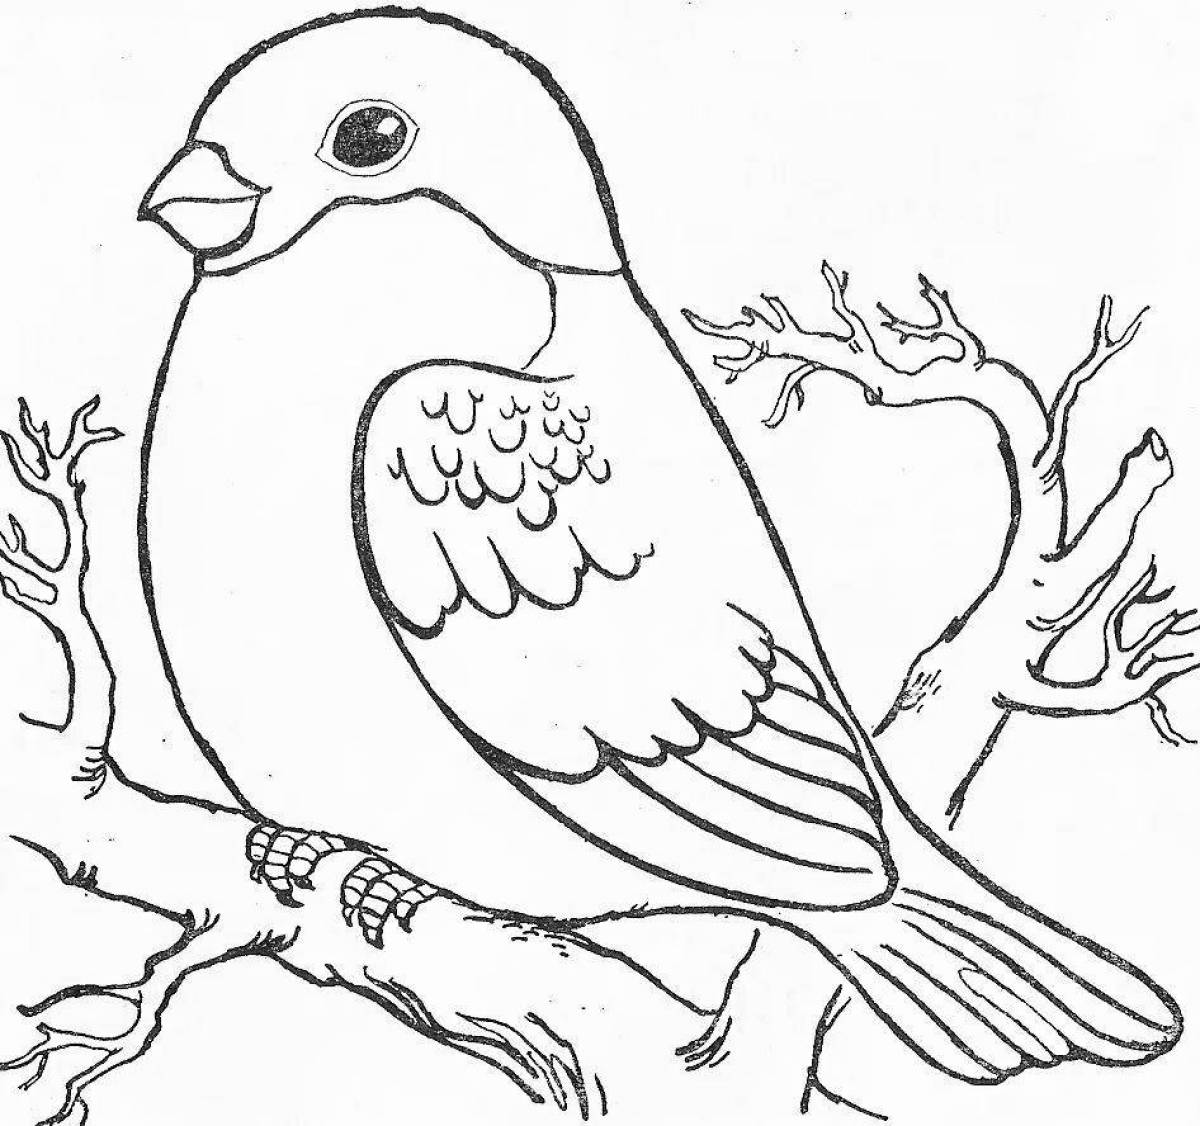 Coloring book fascinating drawing of a bullfinch